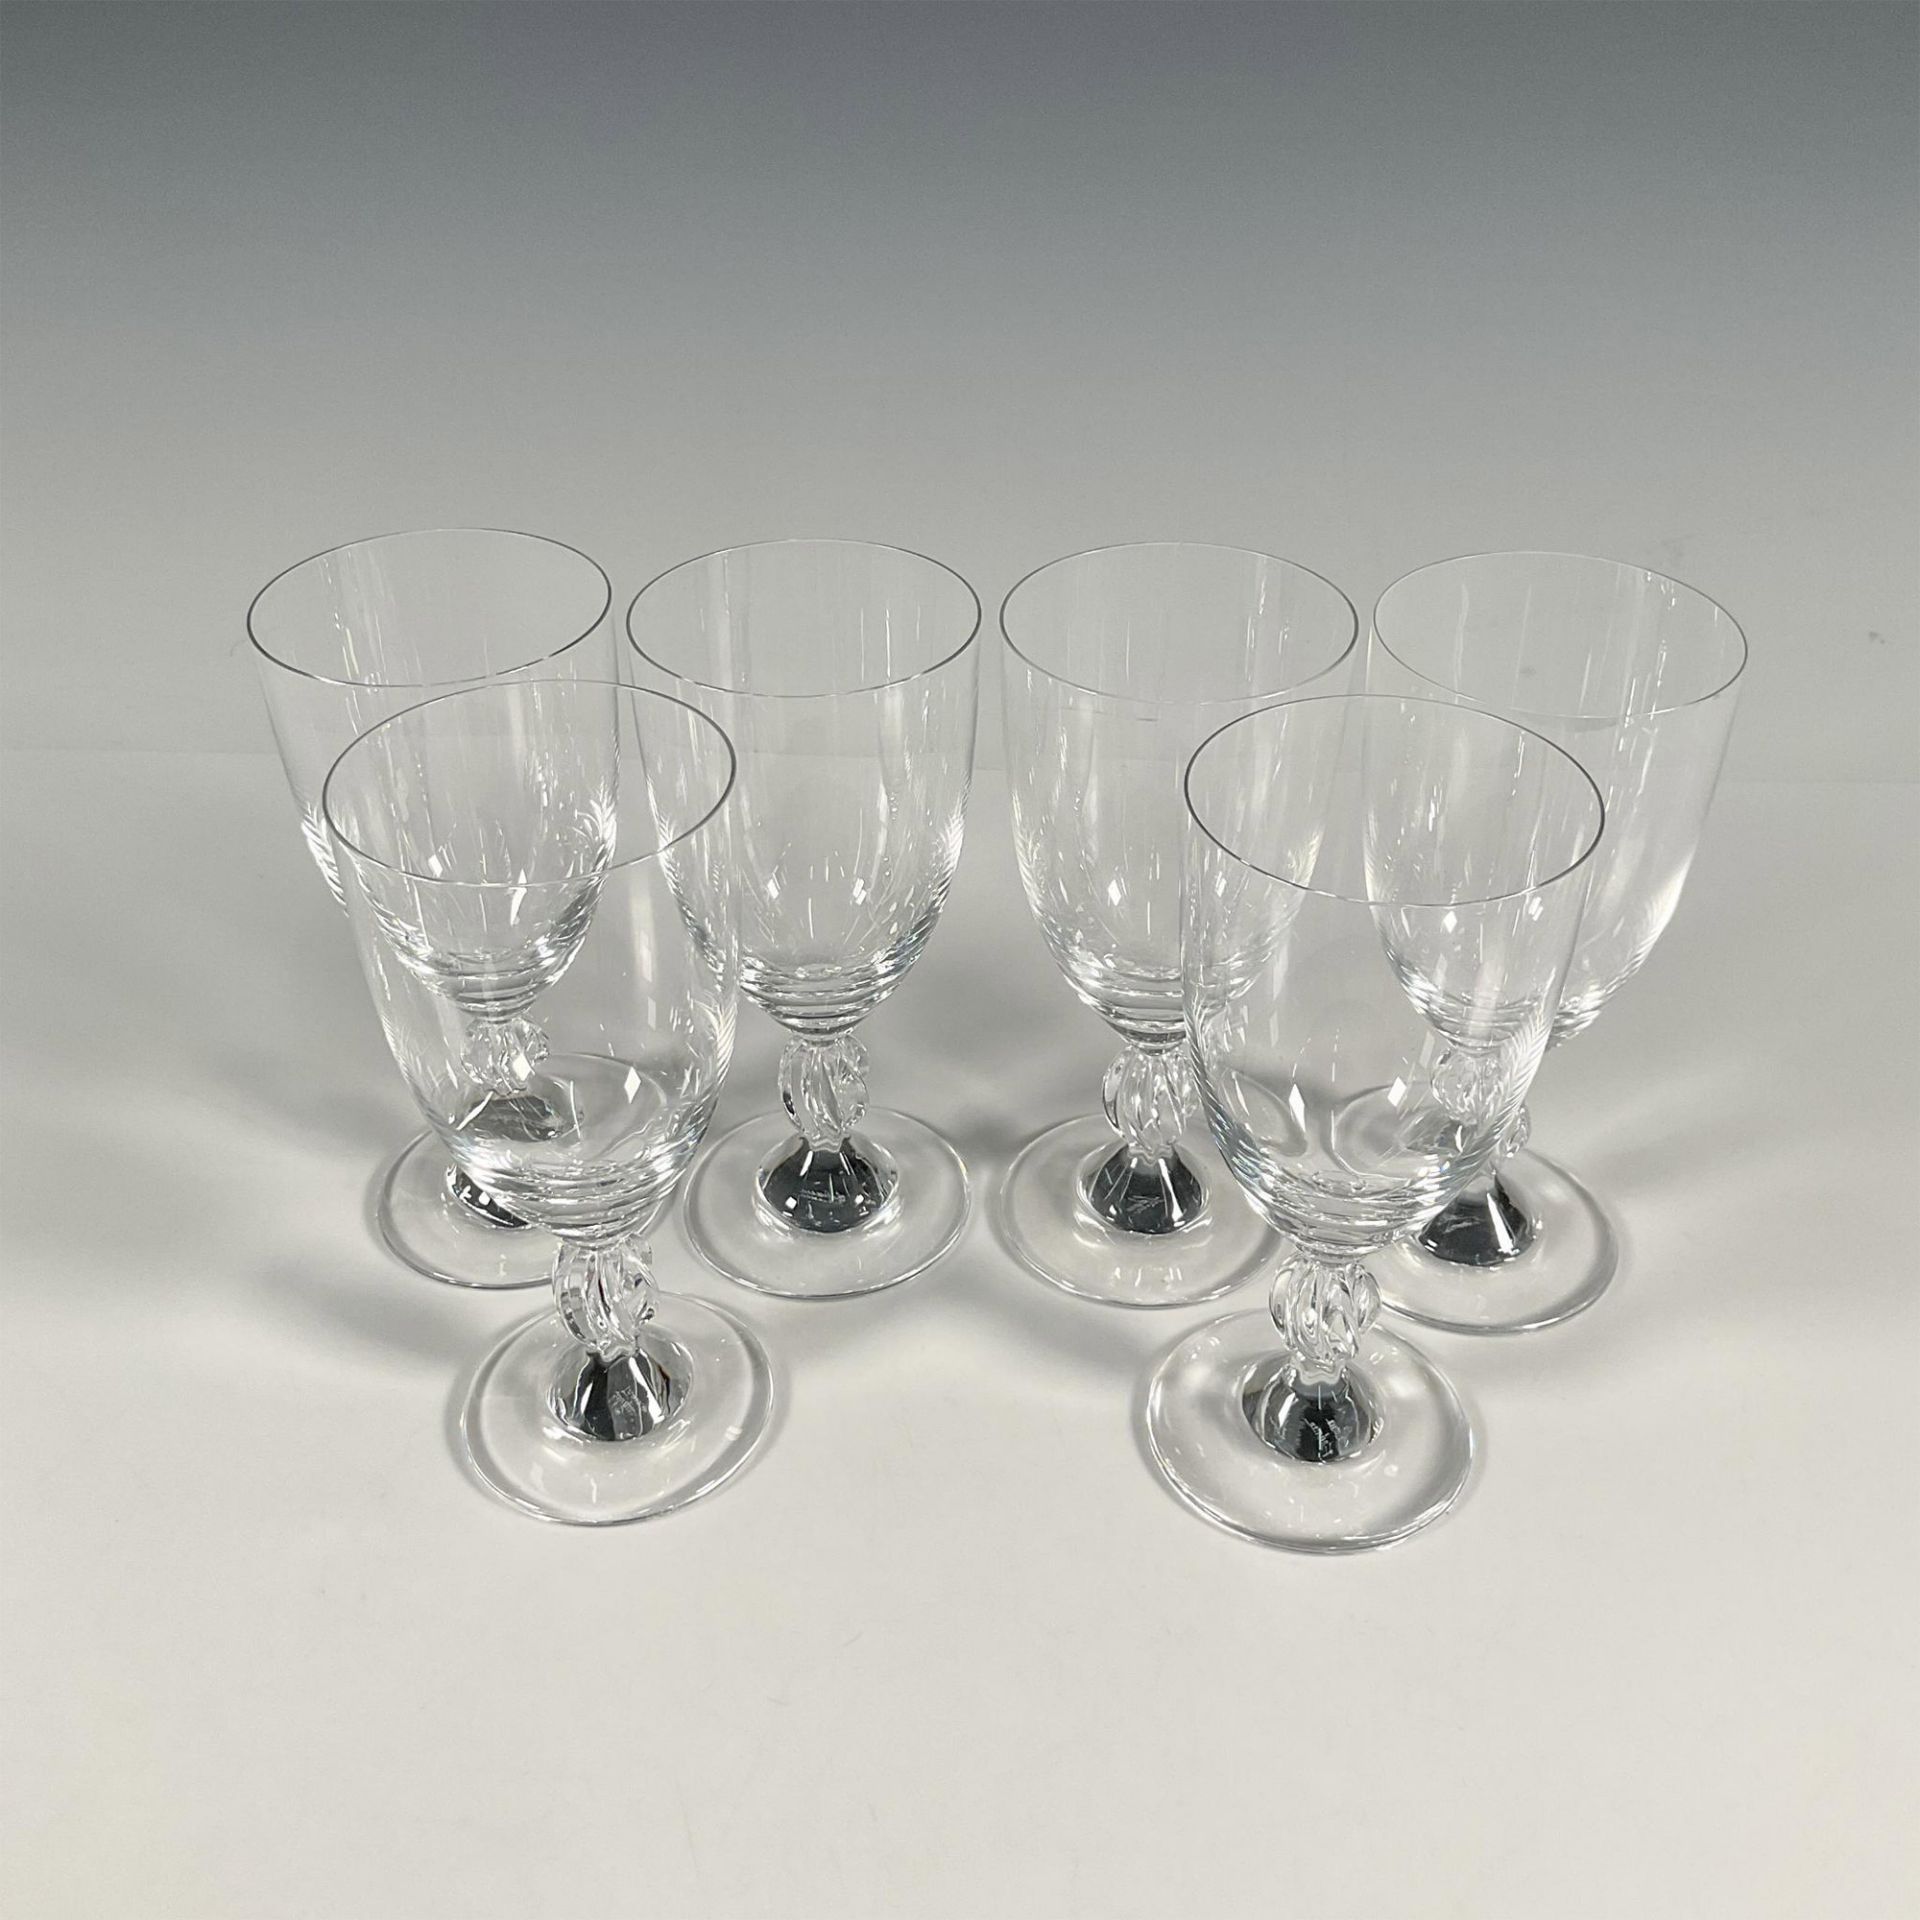 6pc Lalique Crystal Burgundy Wine Glasses, Frejus - Image 2 of 4